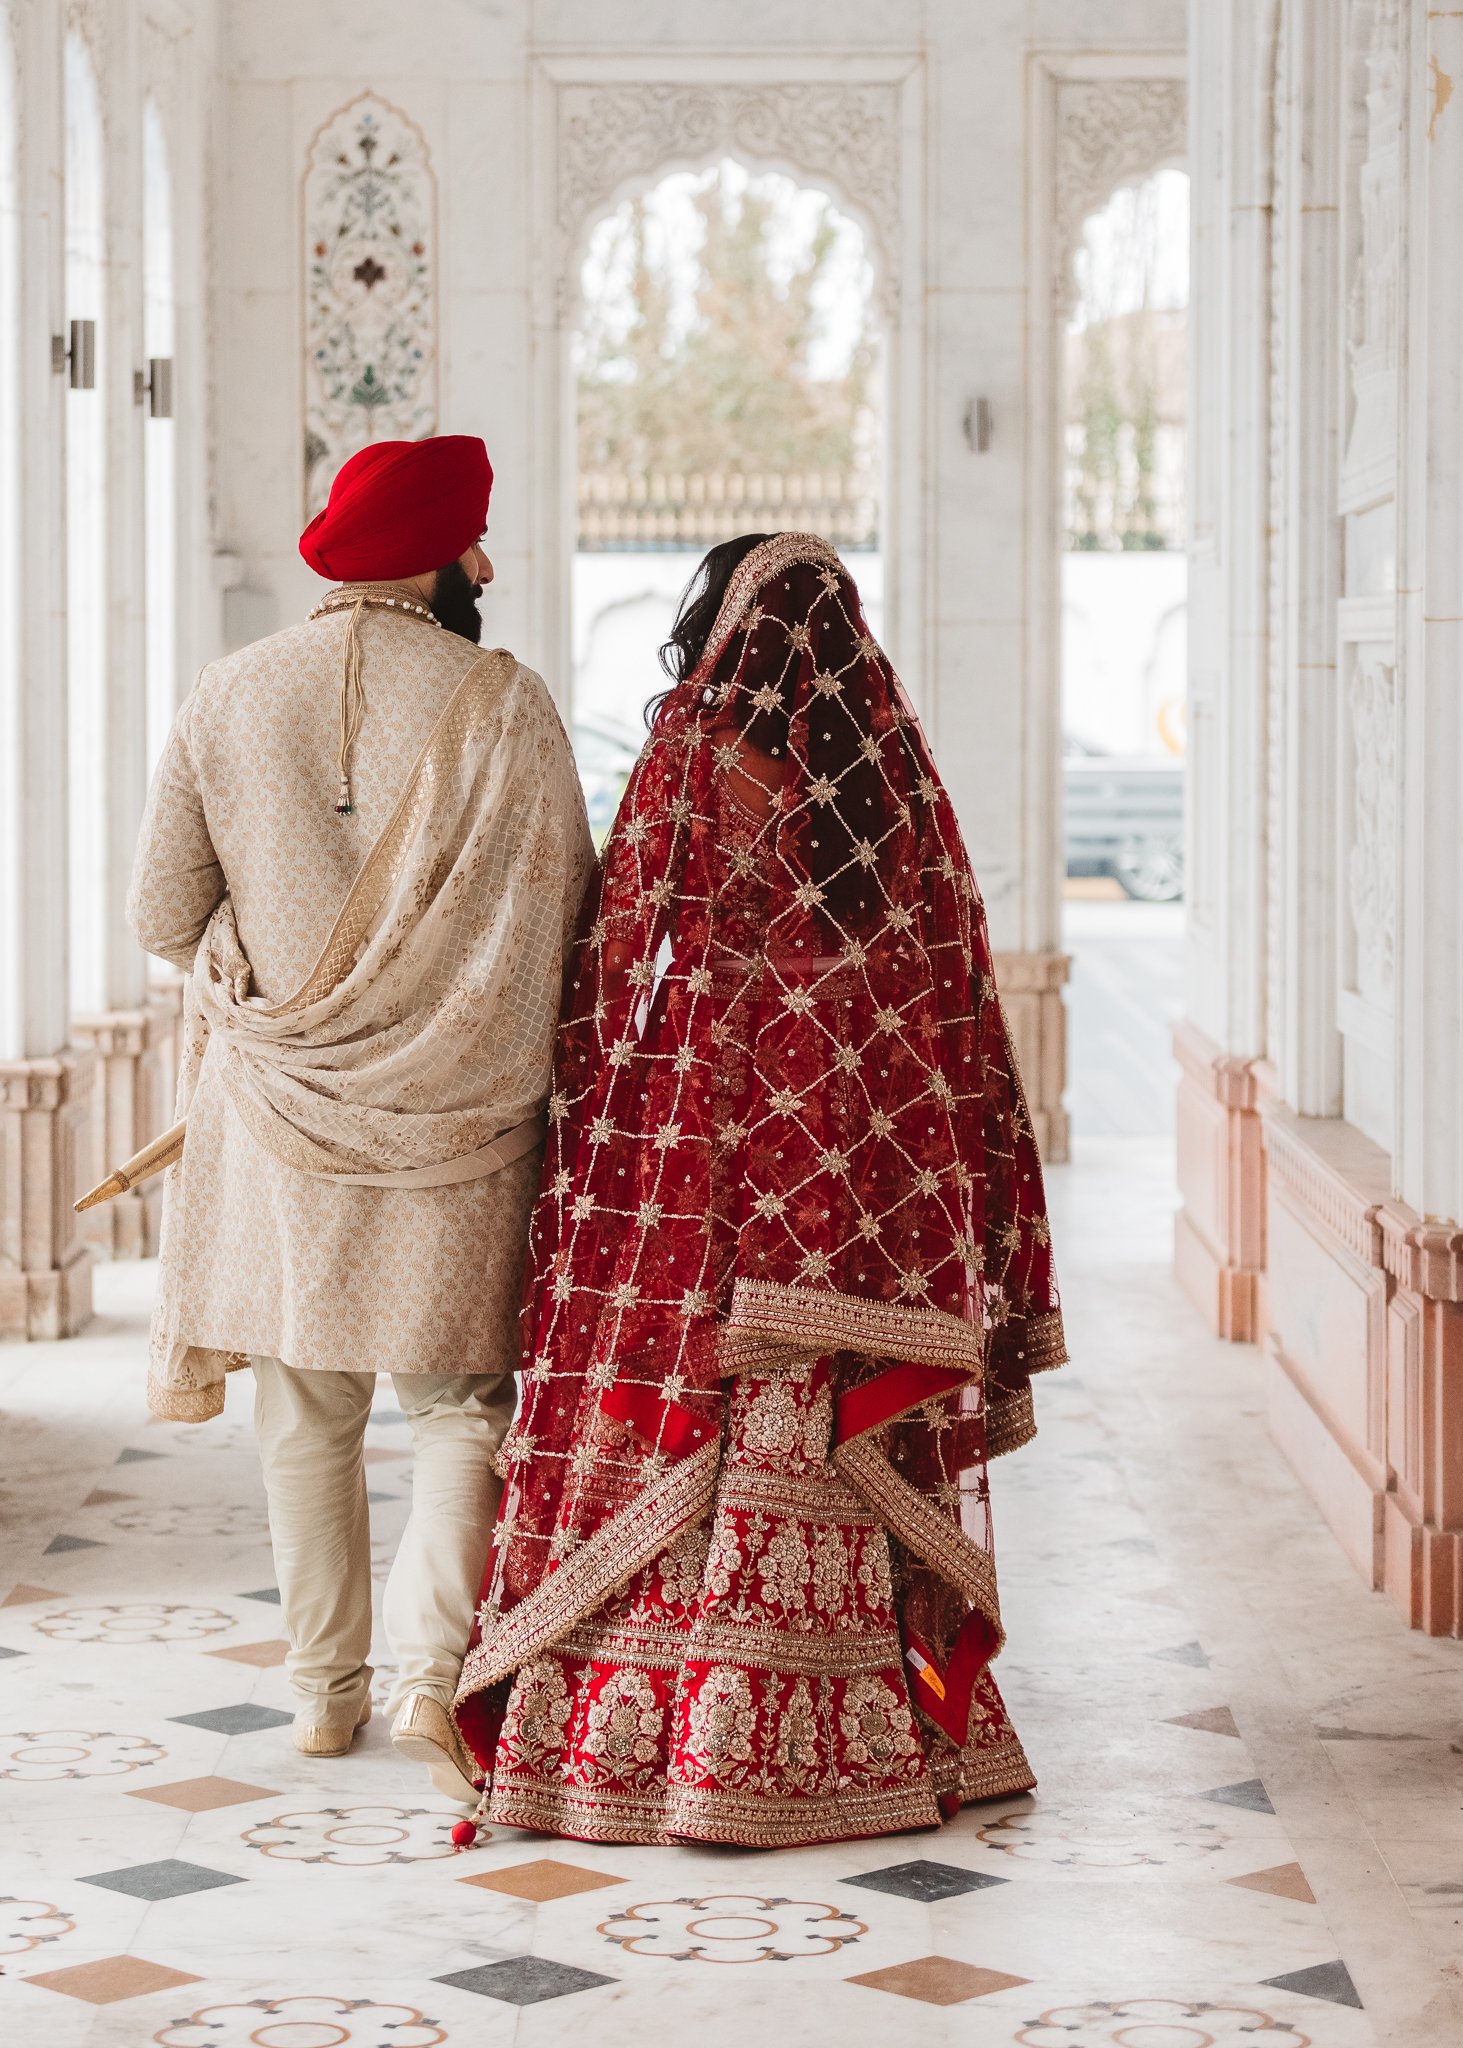 Sikh Gravesend Gurdwara temple wedding-124.jpg